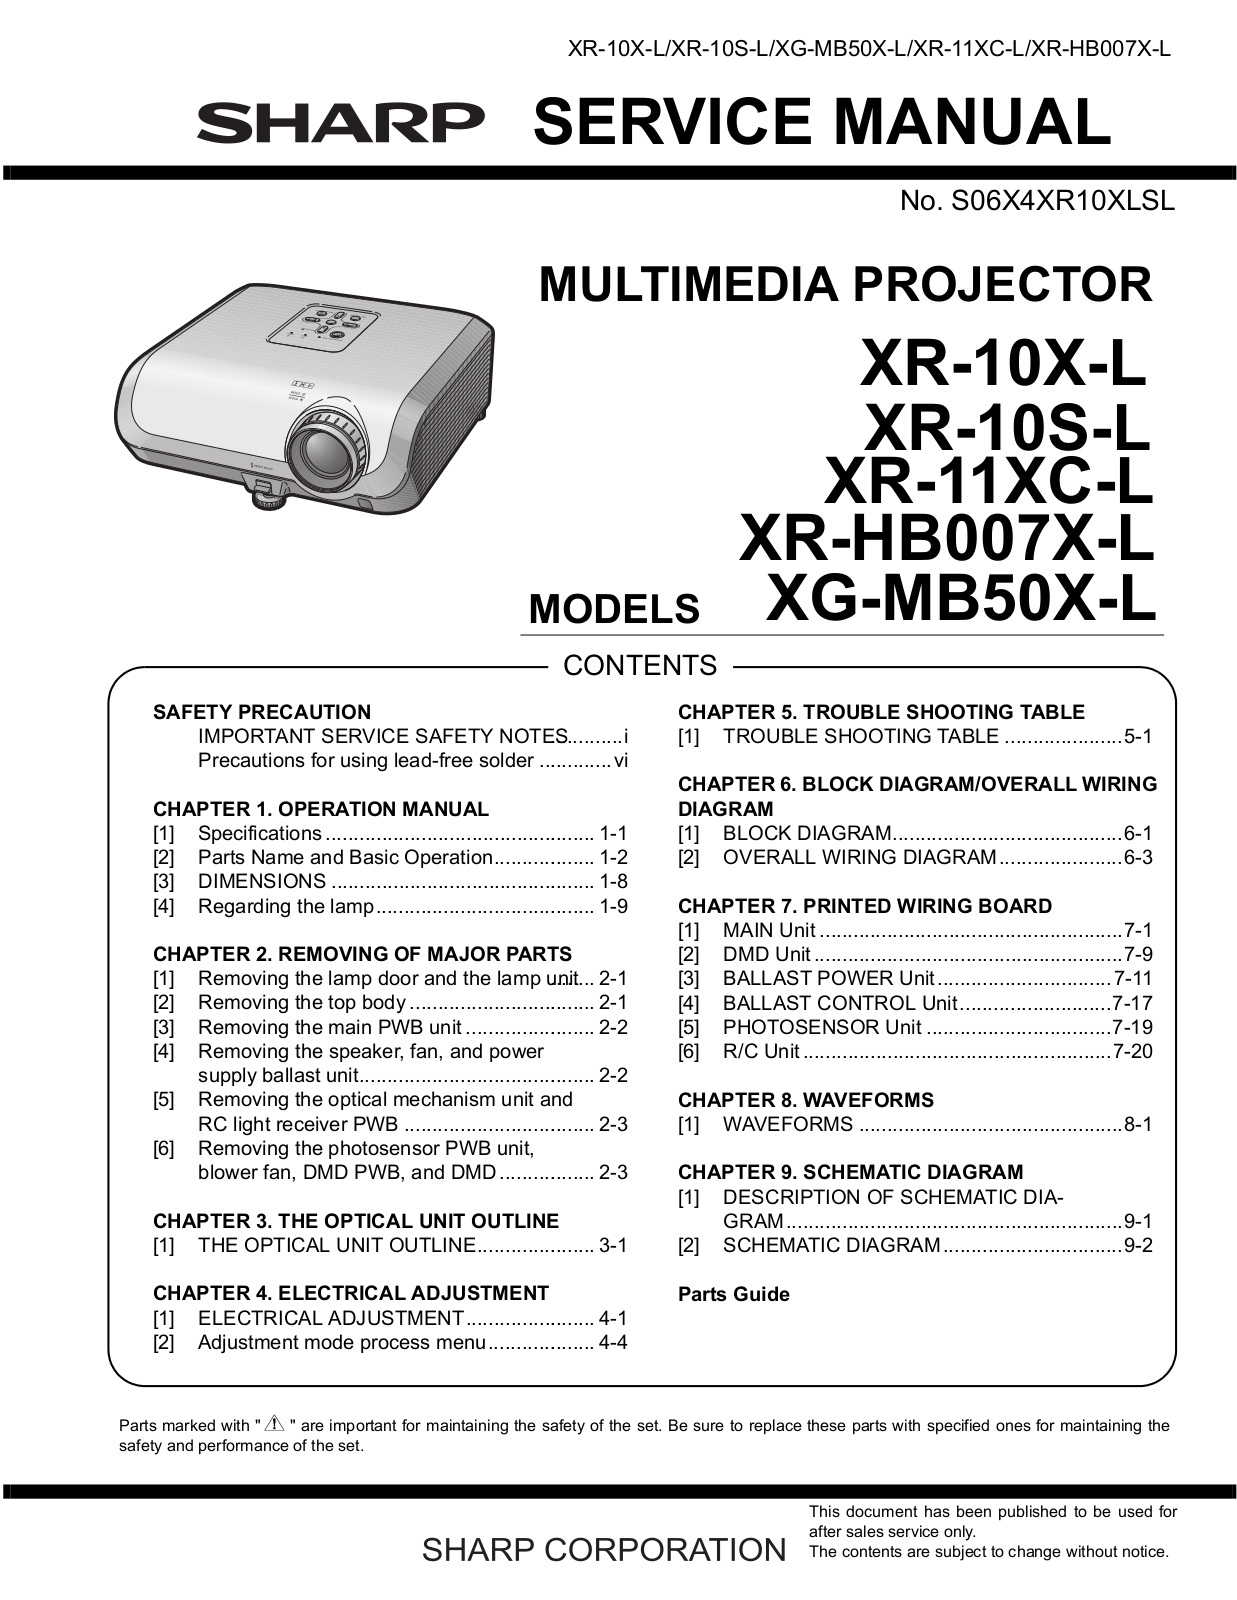 Sharp XR10XL, XR-10S-L, XR-11XC-L, XR-HB007X-L, XG-MB5 Service Manual